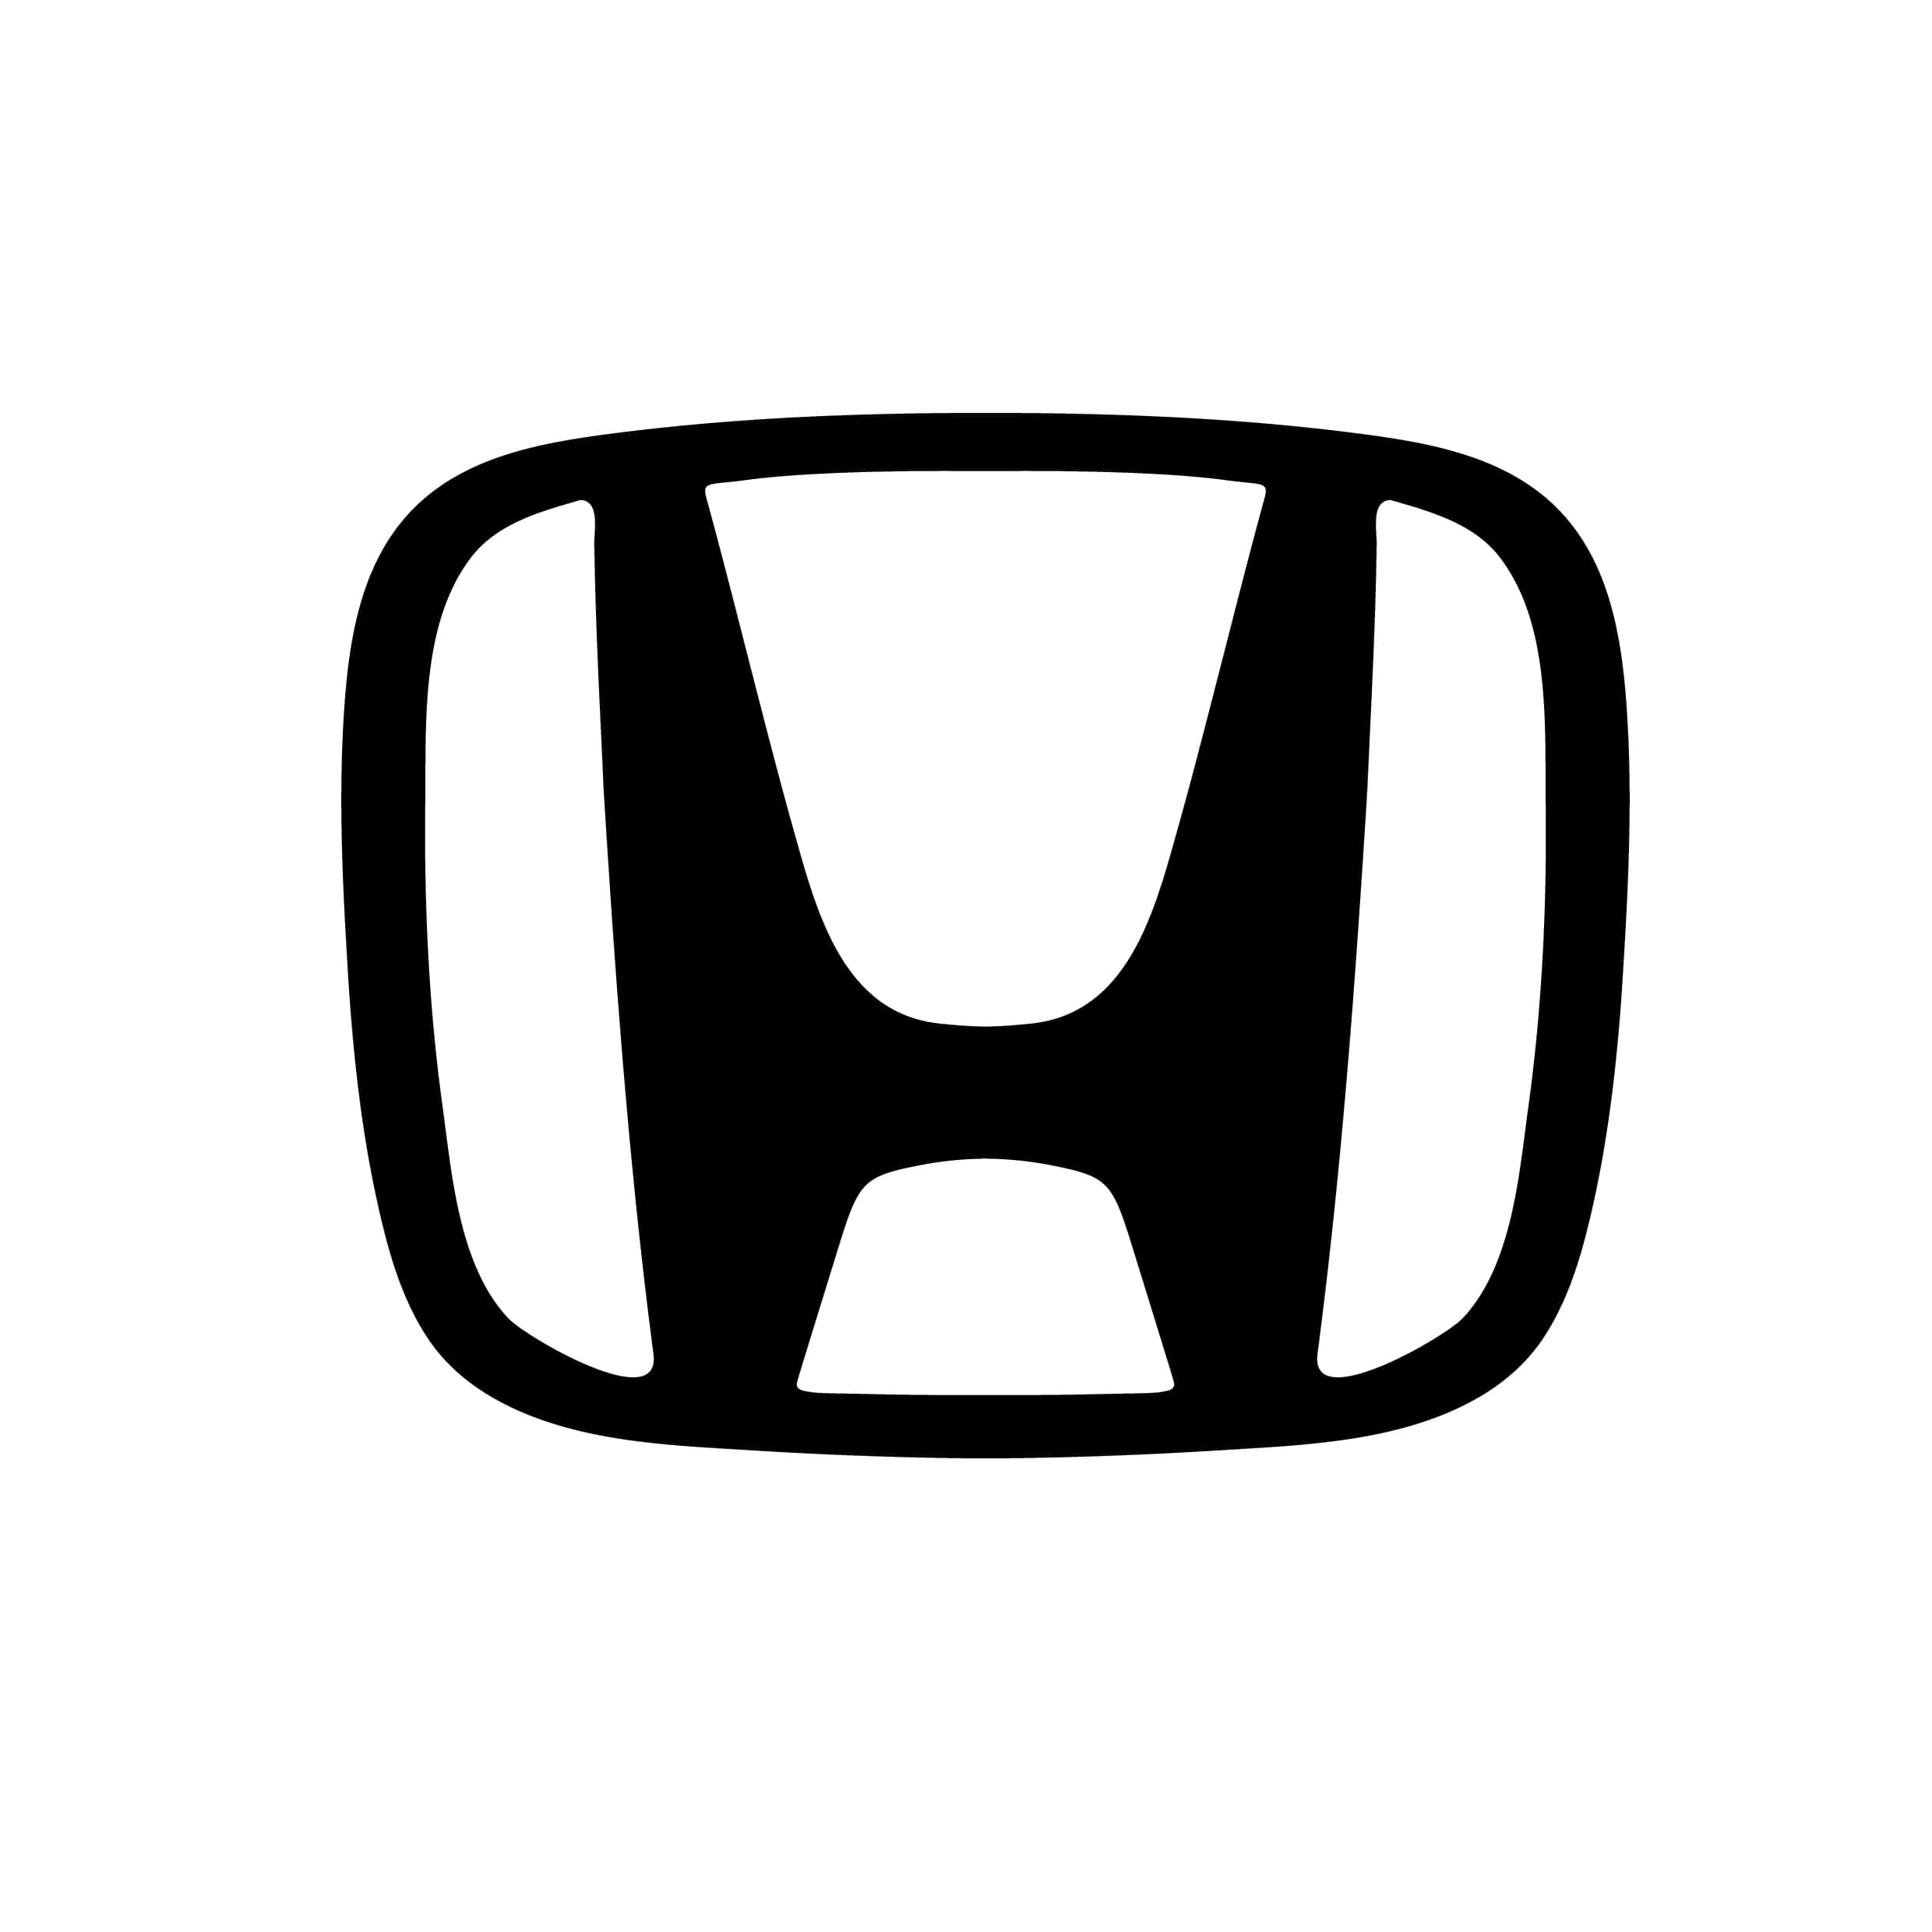 https://media.cdnws.com/_i/46016/4430/995/34/stickers-honda-ref1-autocollant-voiture-sticker-auto-autocollants-decals-sponsors-racing-tuning-sport-logo-min.jpeg